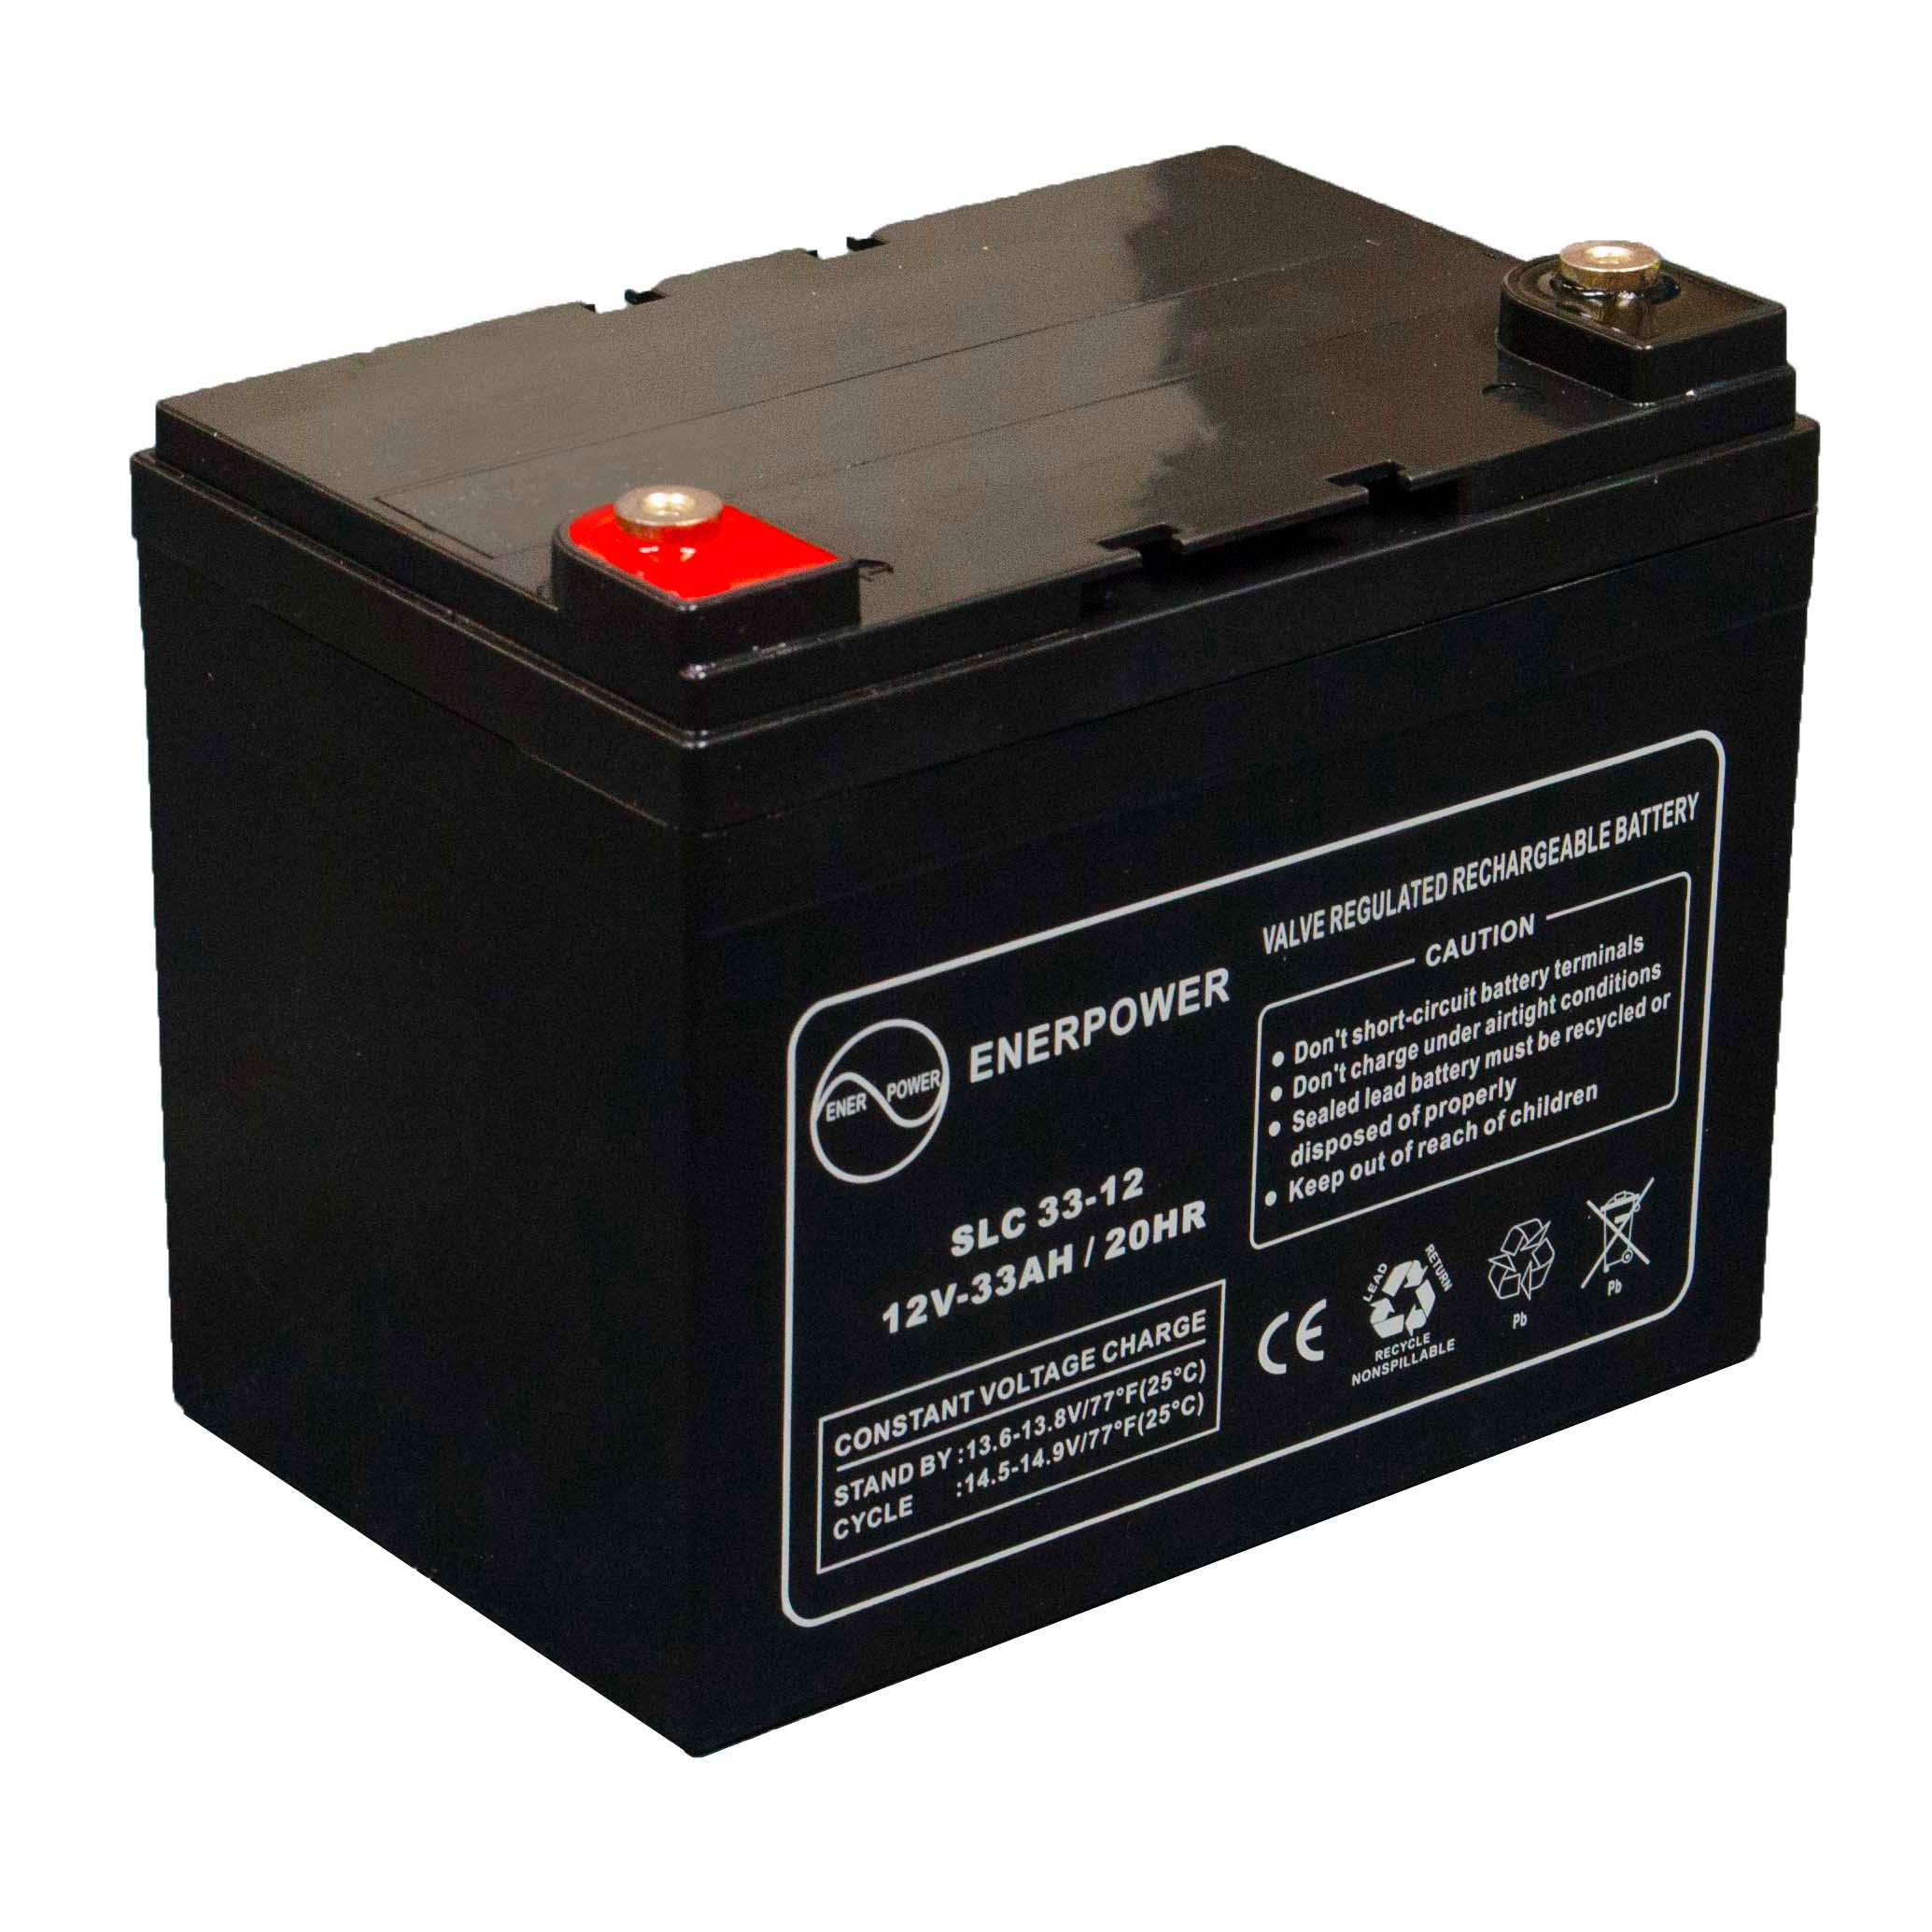 SLC 33-12 12V 33Ah AGM ENERPOWER battery